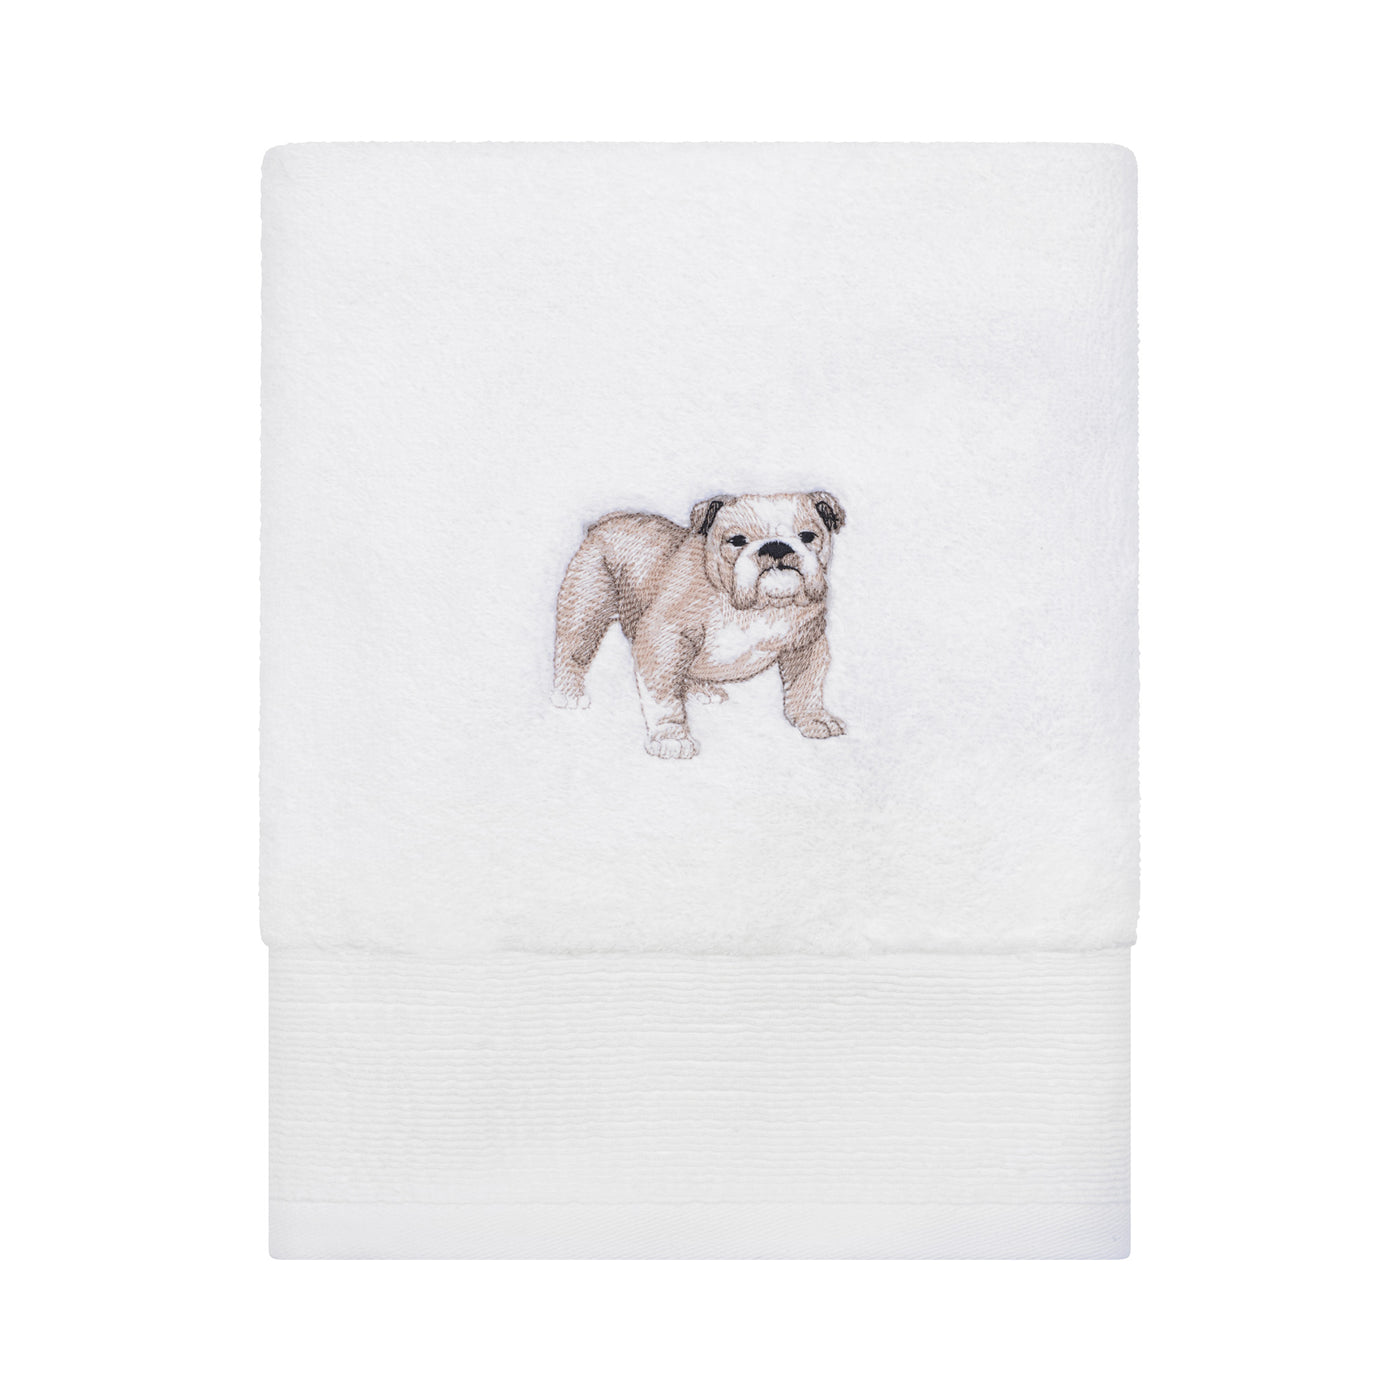 Animal Motif Embroidered Como 700gsm Towel Collection